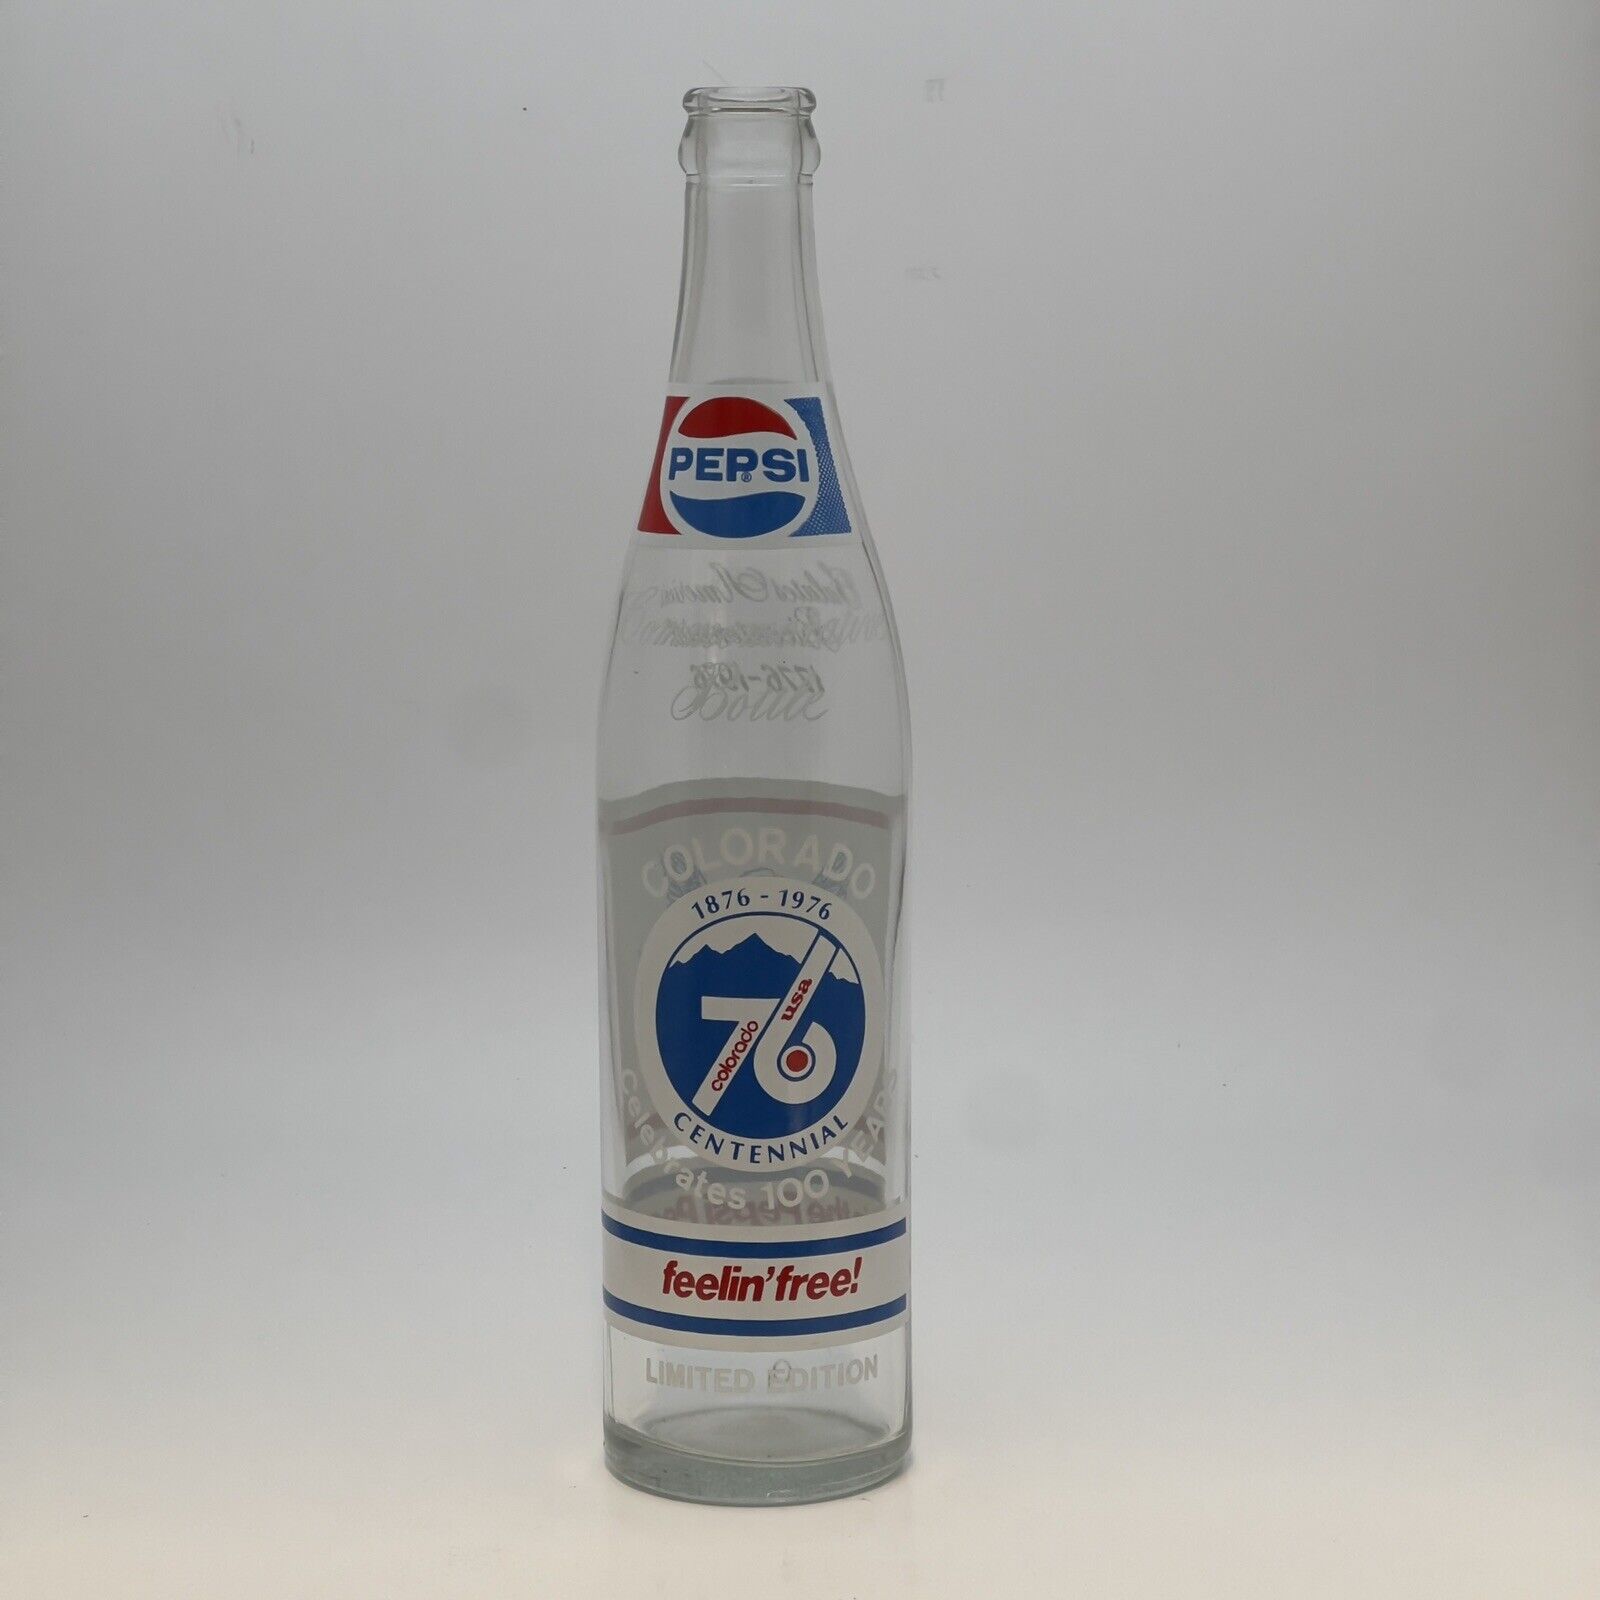 MINT 1976 Vintage Pepsi Glass Soda Bottle COLORADO Centennial Limited Edition